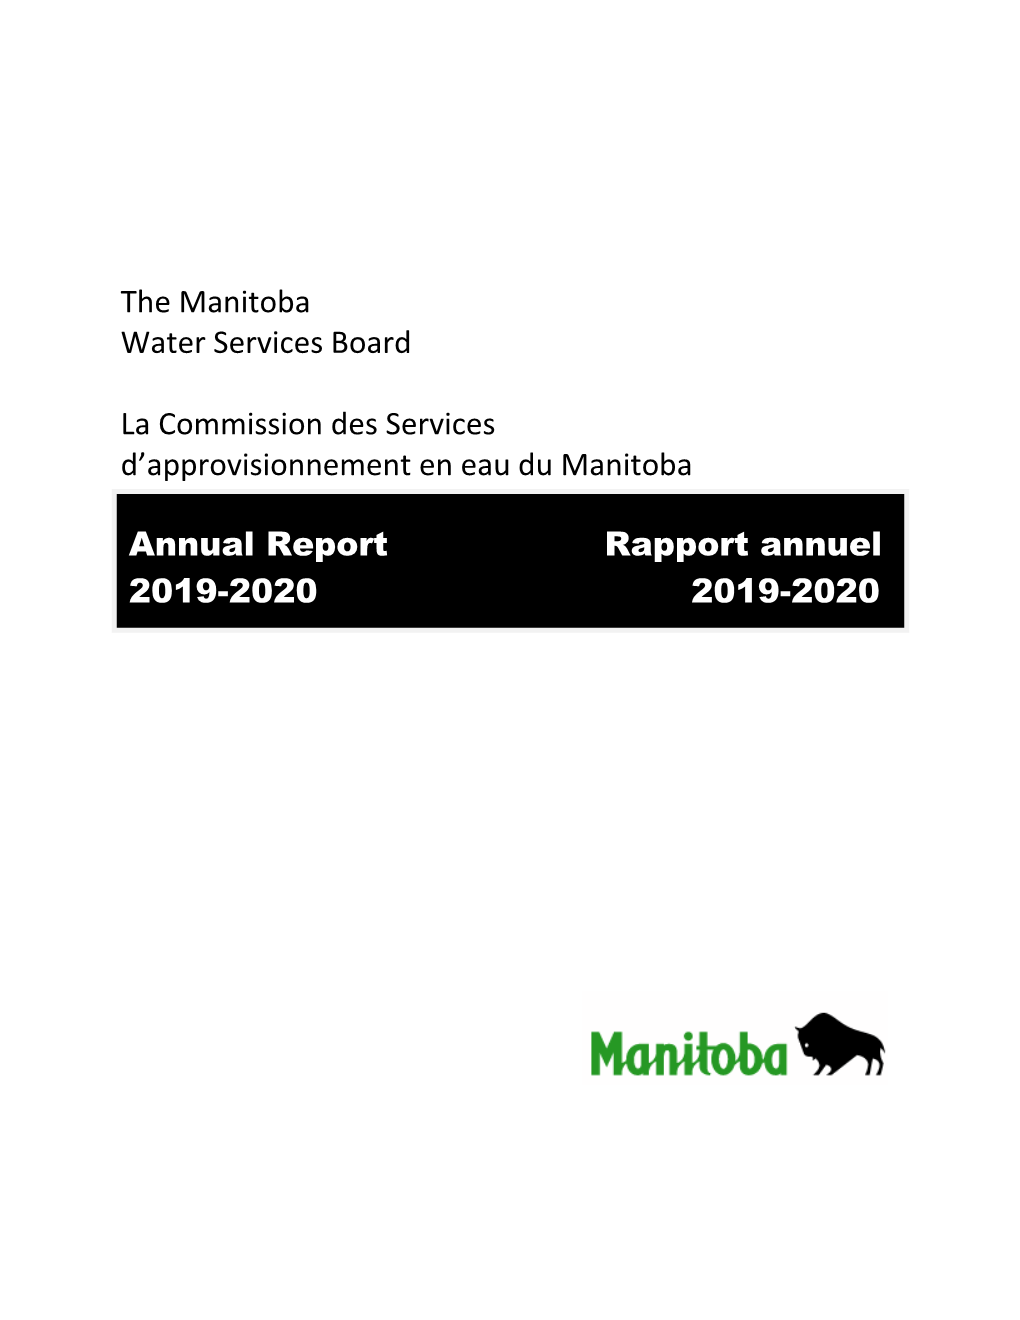 The Manitoba Water Services Board 2019-2020 Annual Report